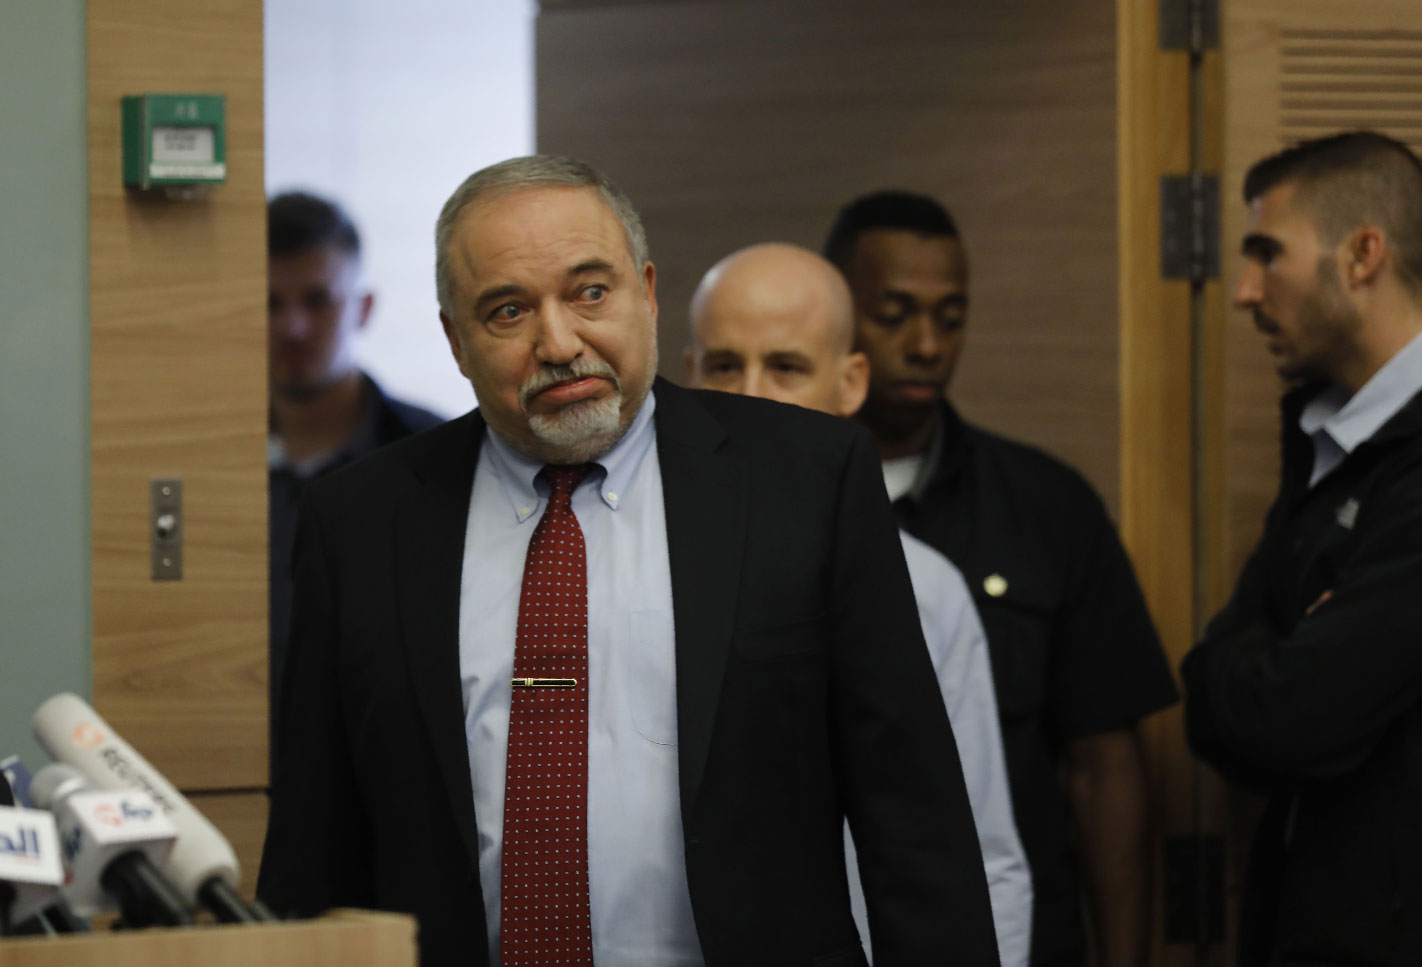 Lieberman has spoken in favour of harsh Israeli military action in Gaza.